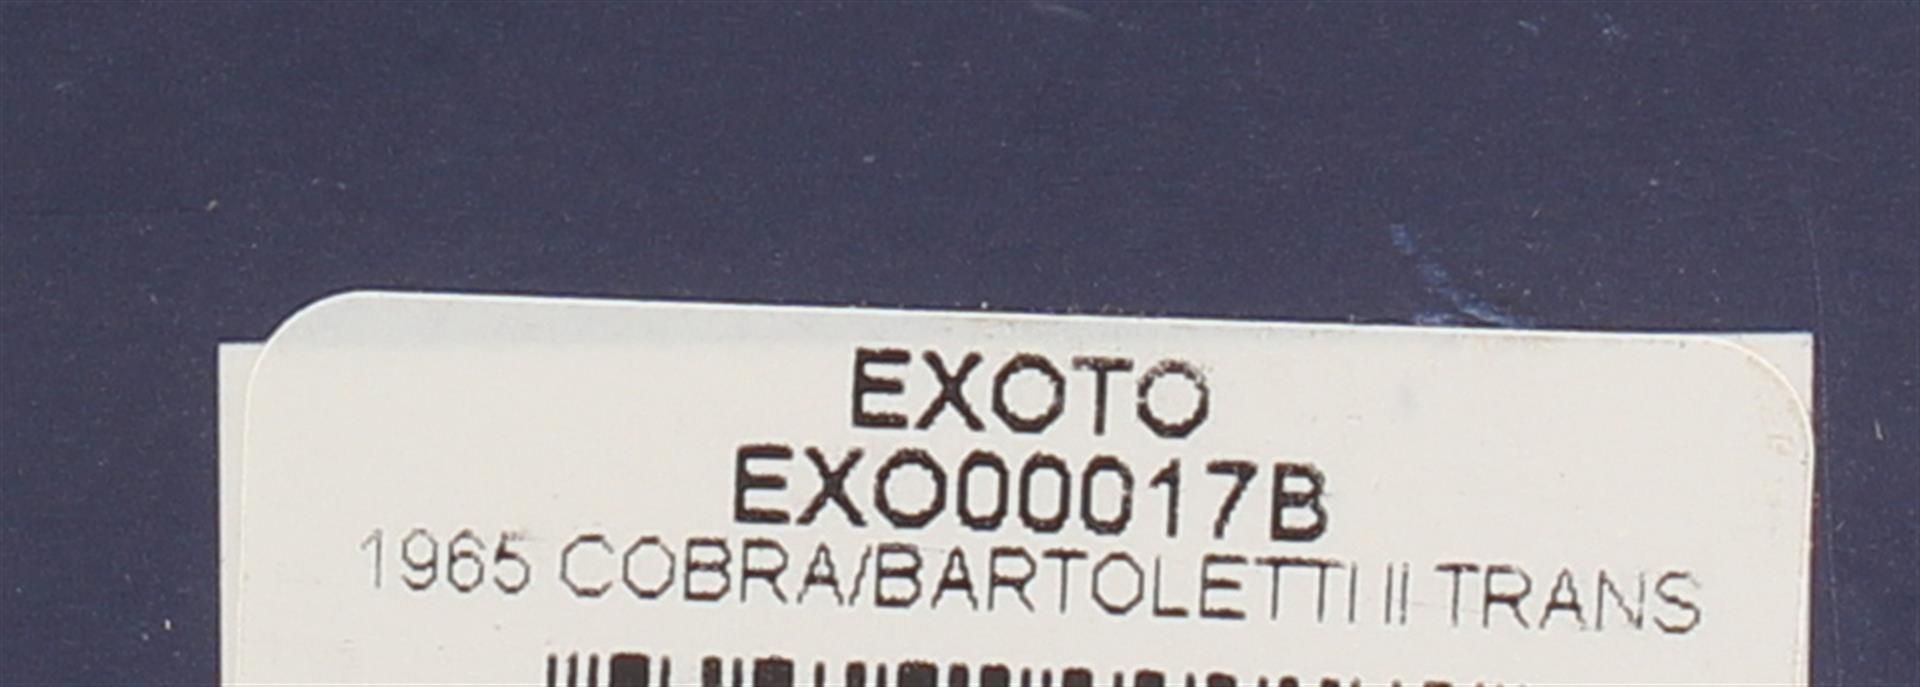 Exoto Race Car Transporter - Image 3 of 3